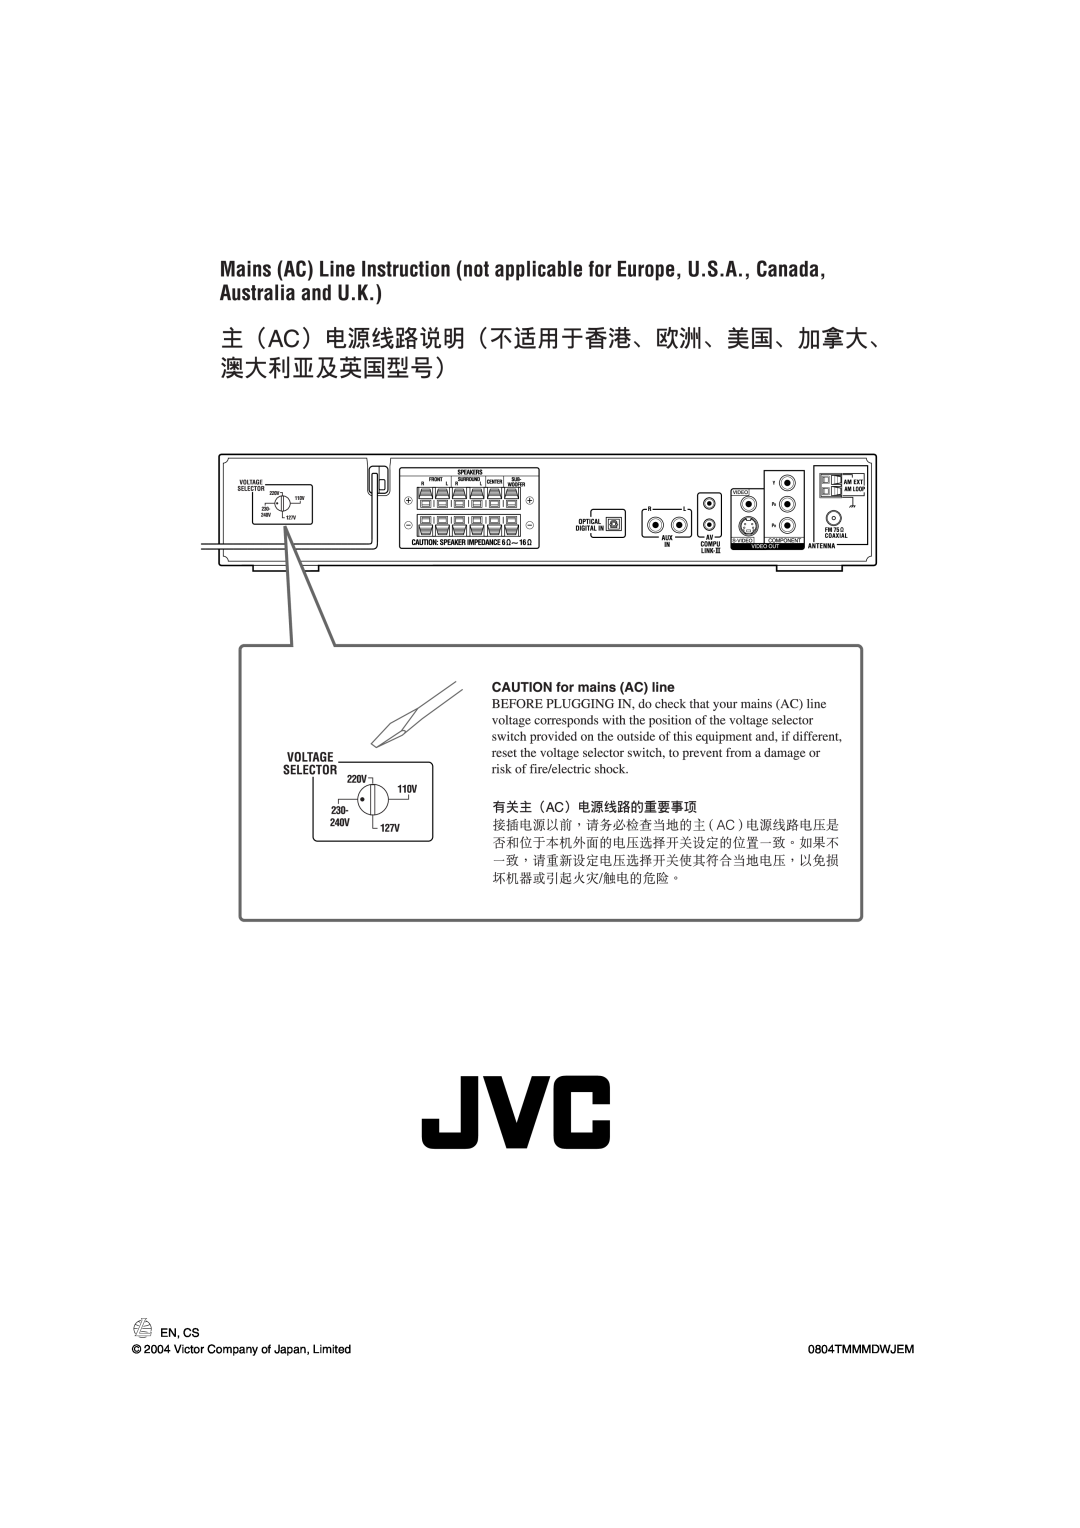 JVC GVT0141-003A manual En, Cs, Victor Company of Japan, Limited, 0804TMMMDWJEM 